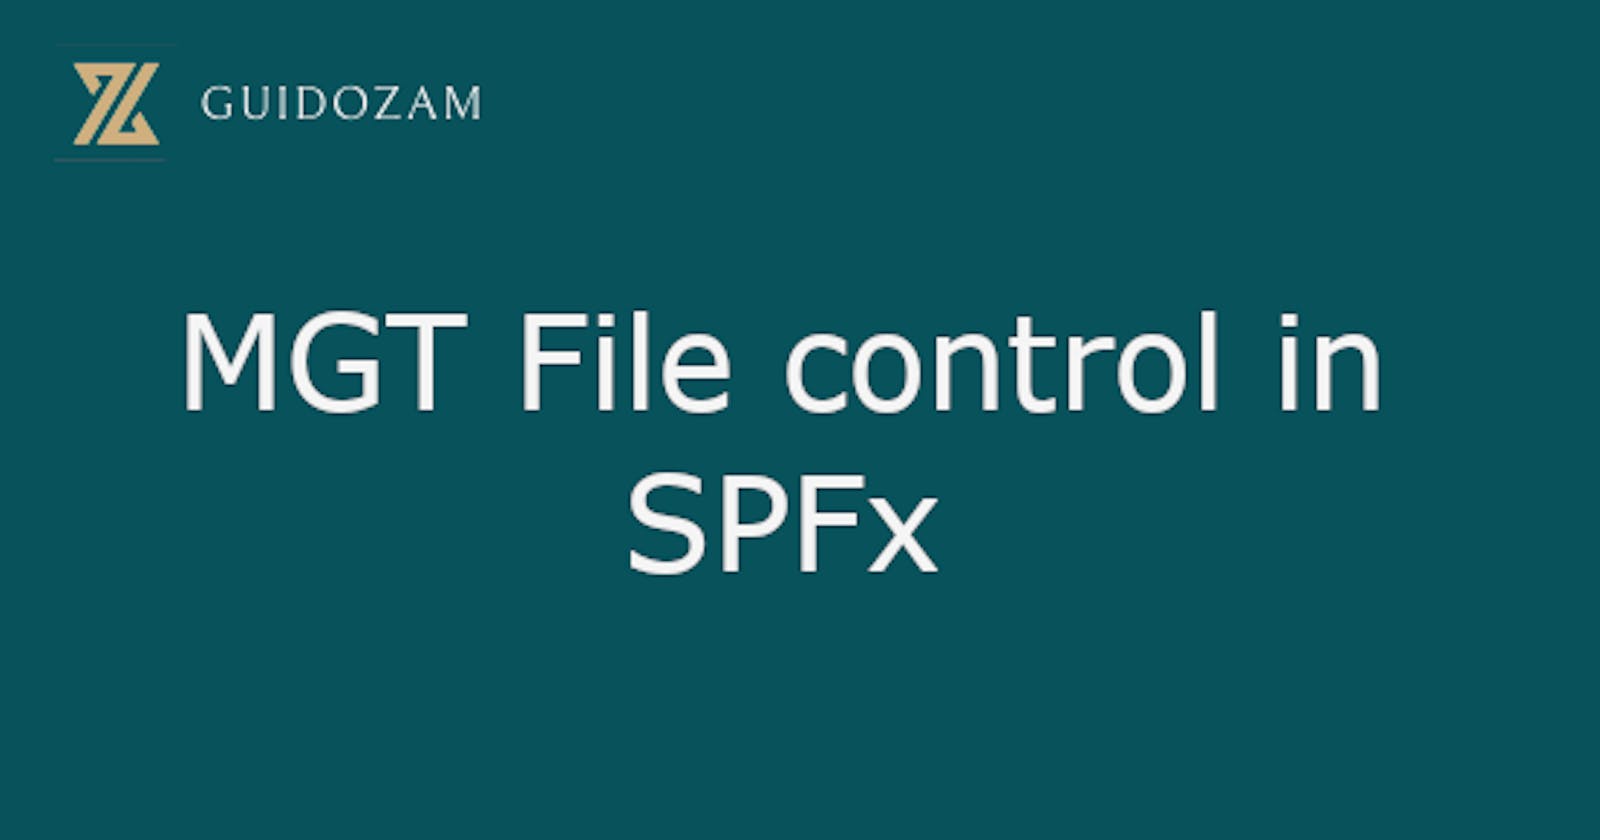 MGT File control in SPFx